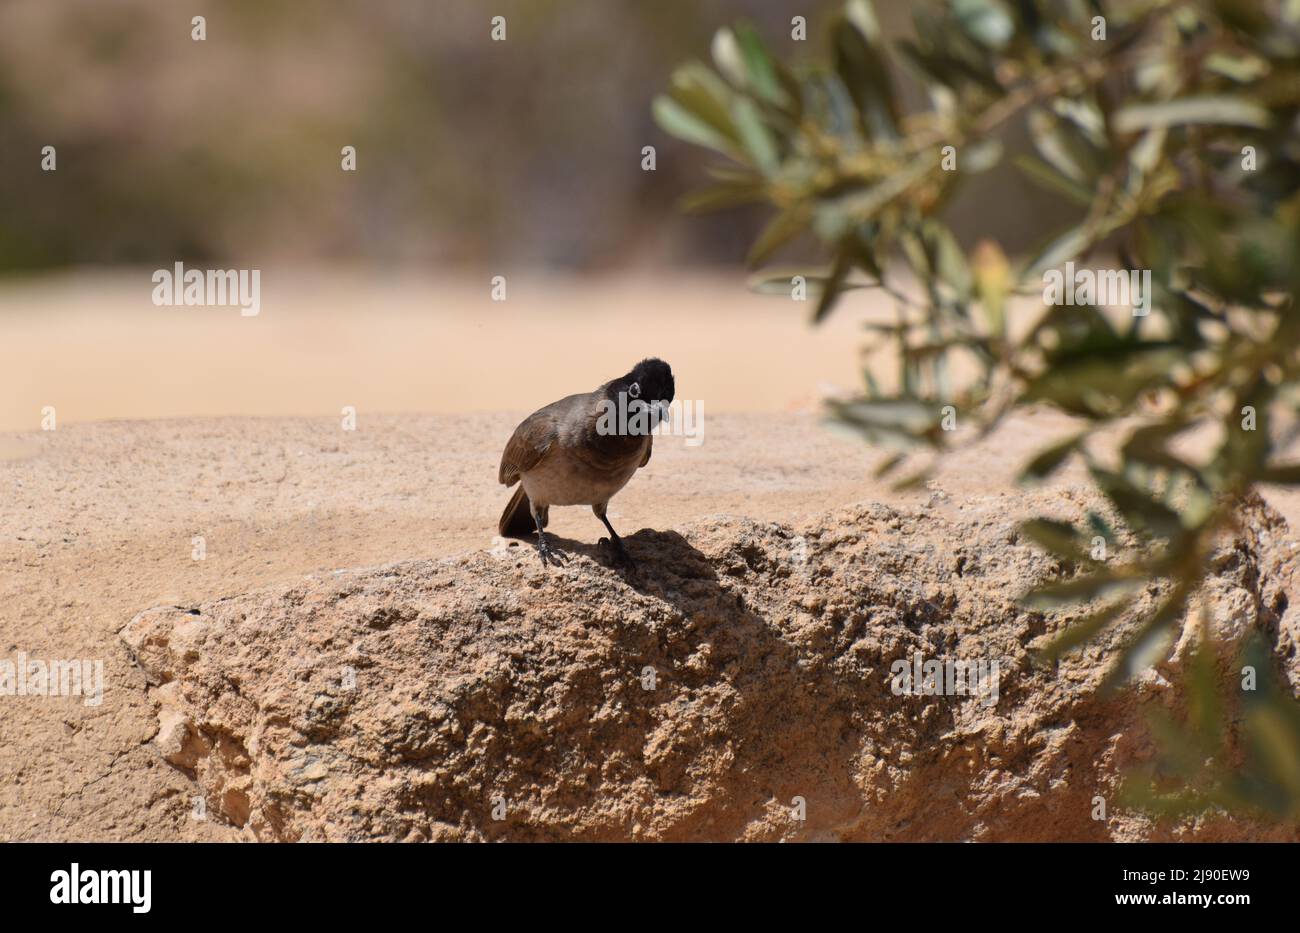 A Common Bulbul bird Pycnonotus barbatus standing on a desert rock looking inquisitive Stock Photo